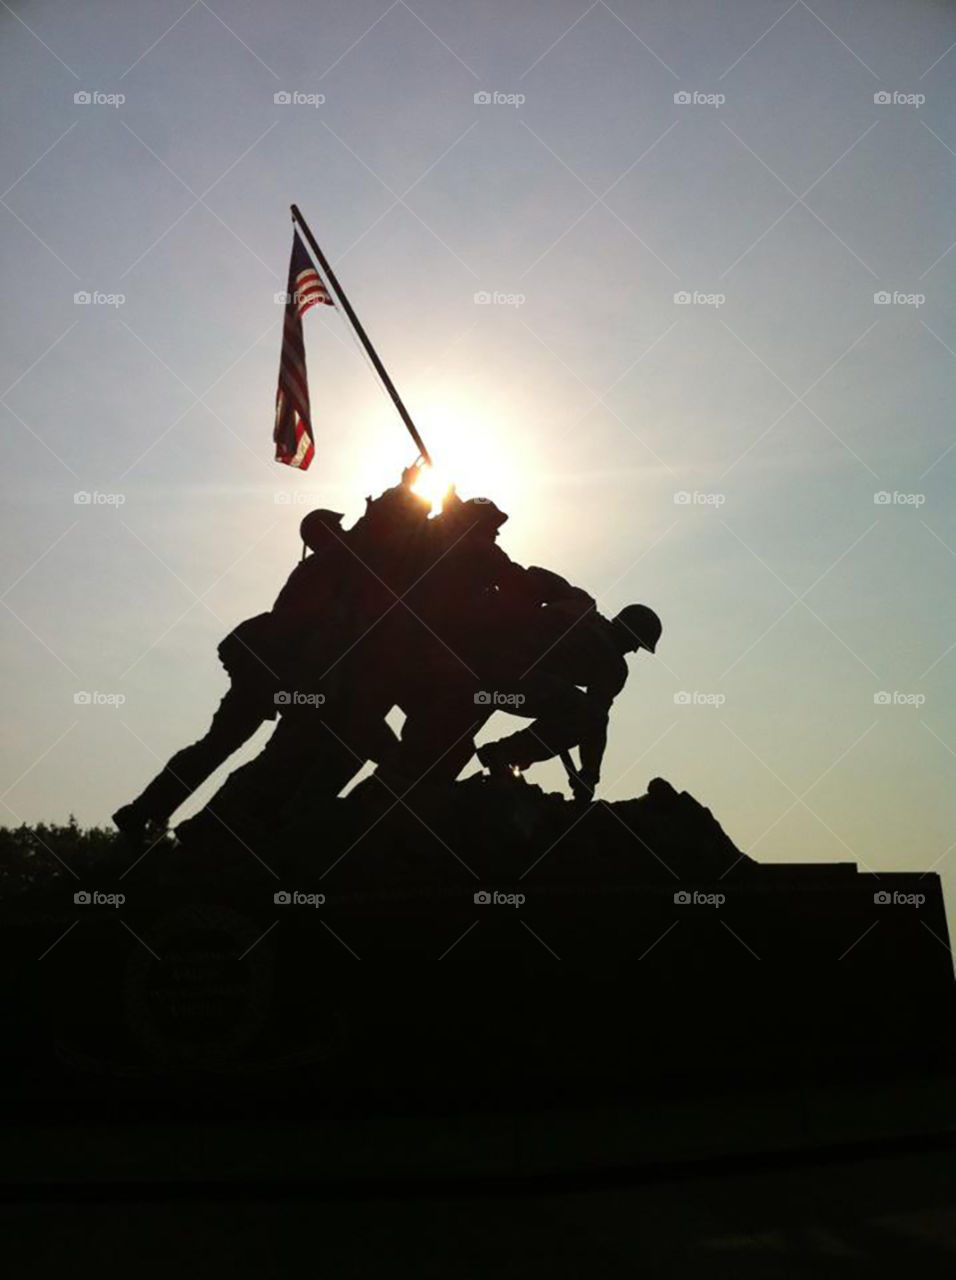 Iwo Jima memorial at sunset in silhouette in Washington, D.C.